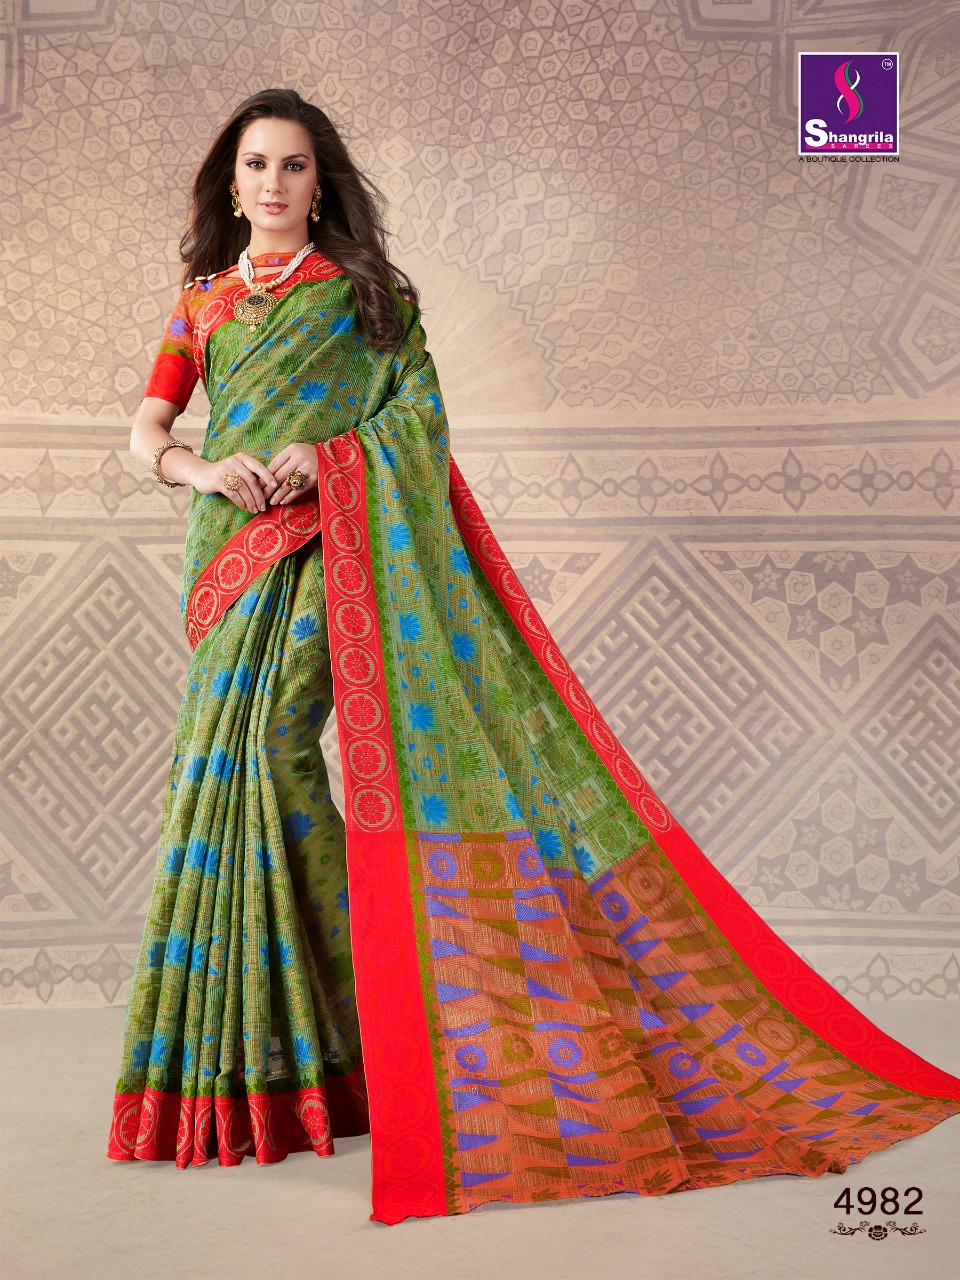 Shangrila mishka cotton printed designer sarees exporter